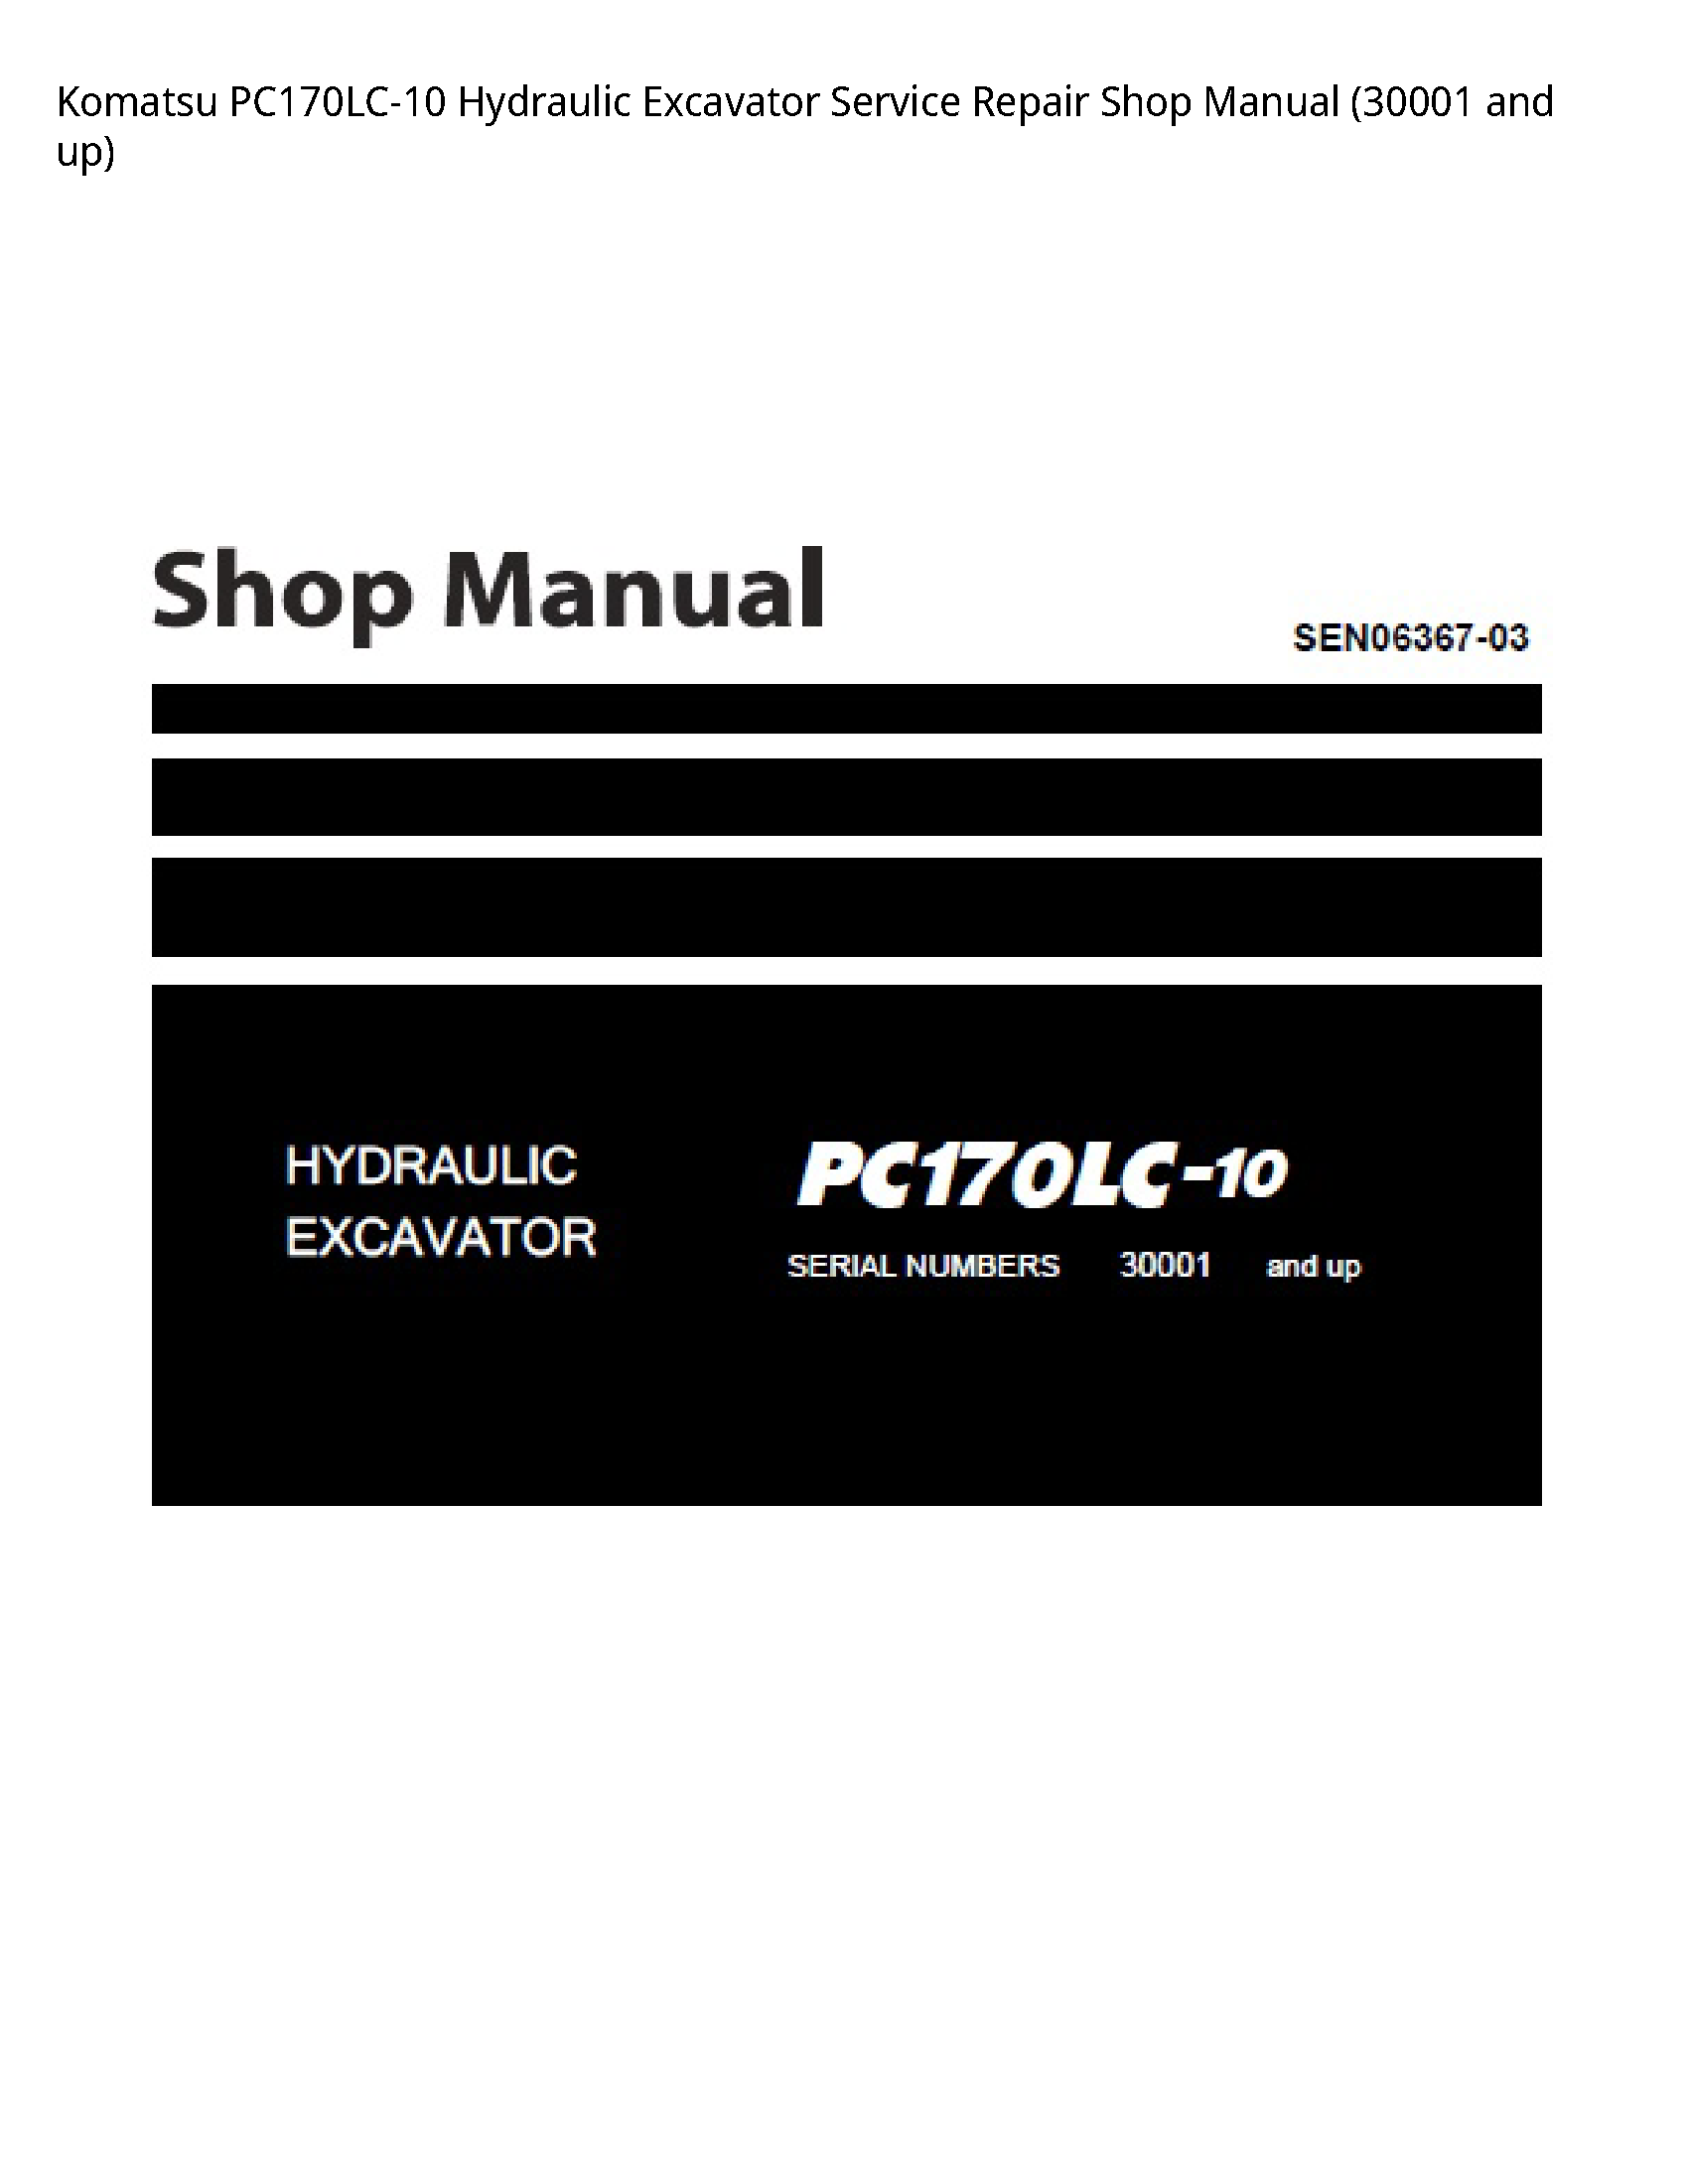 KOMATSU PC170LC-10 Hydraulic Excavator manual